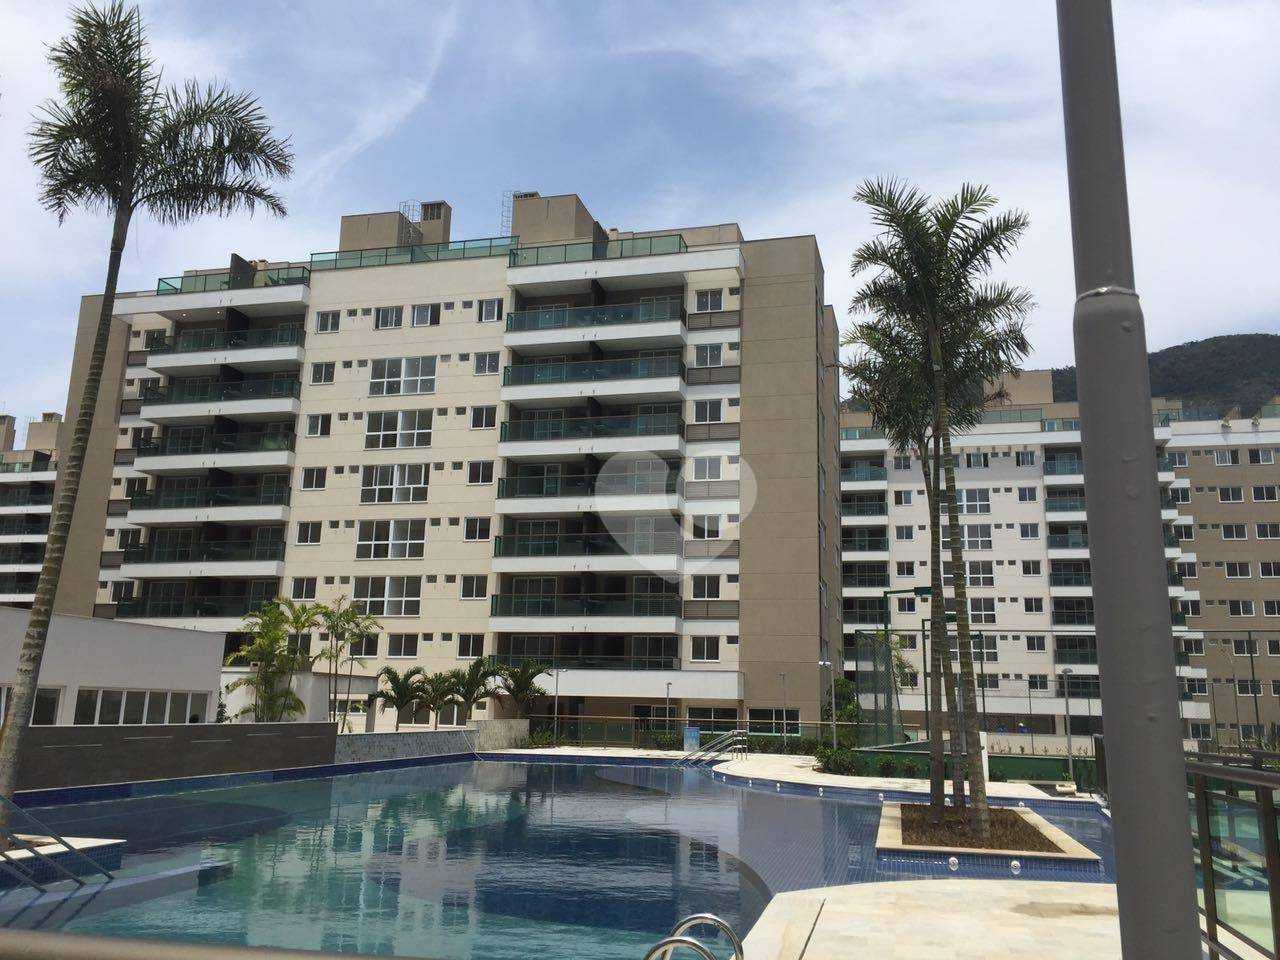 Condominium in Sitio Burle Marx, Rio de Janeiro 12001132